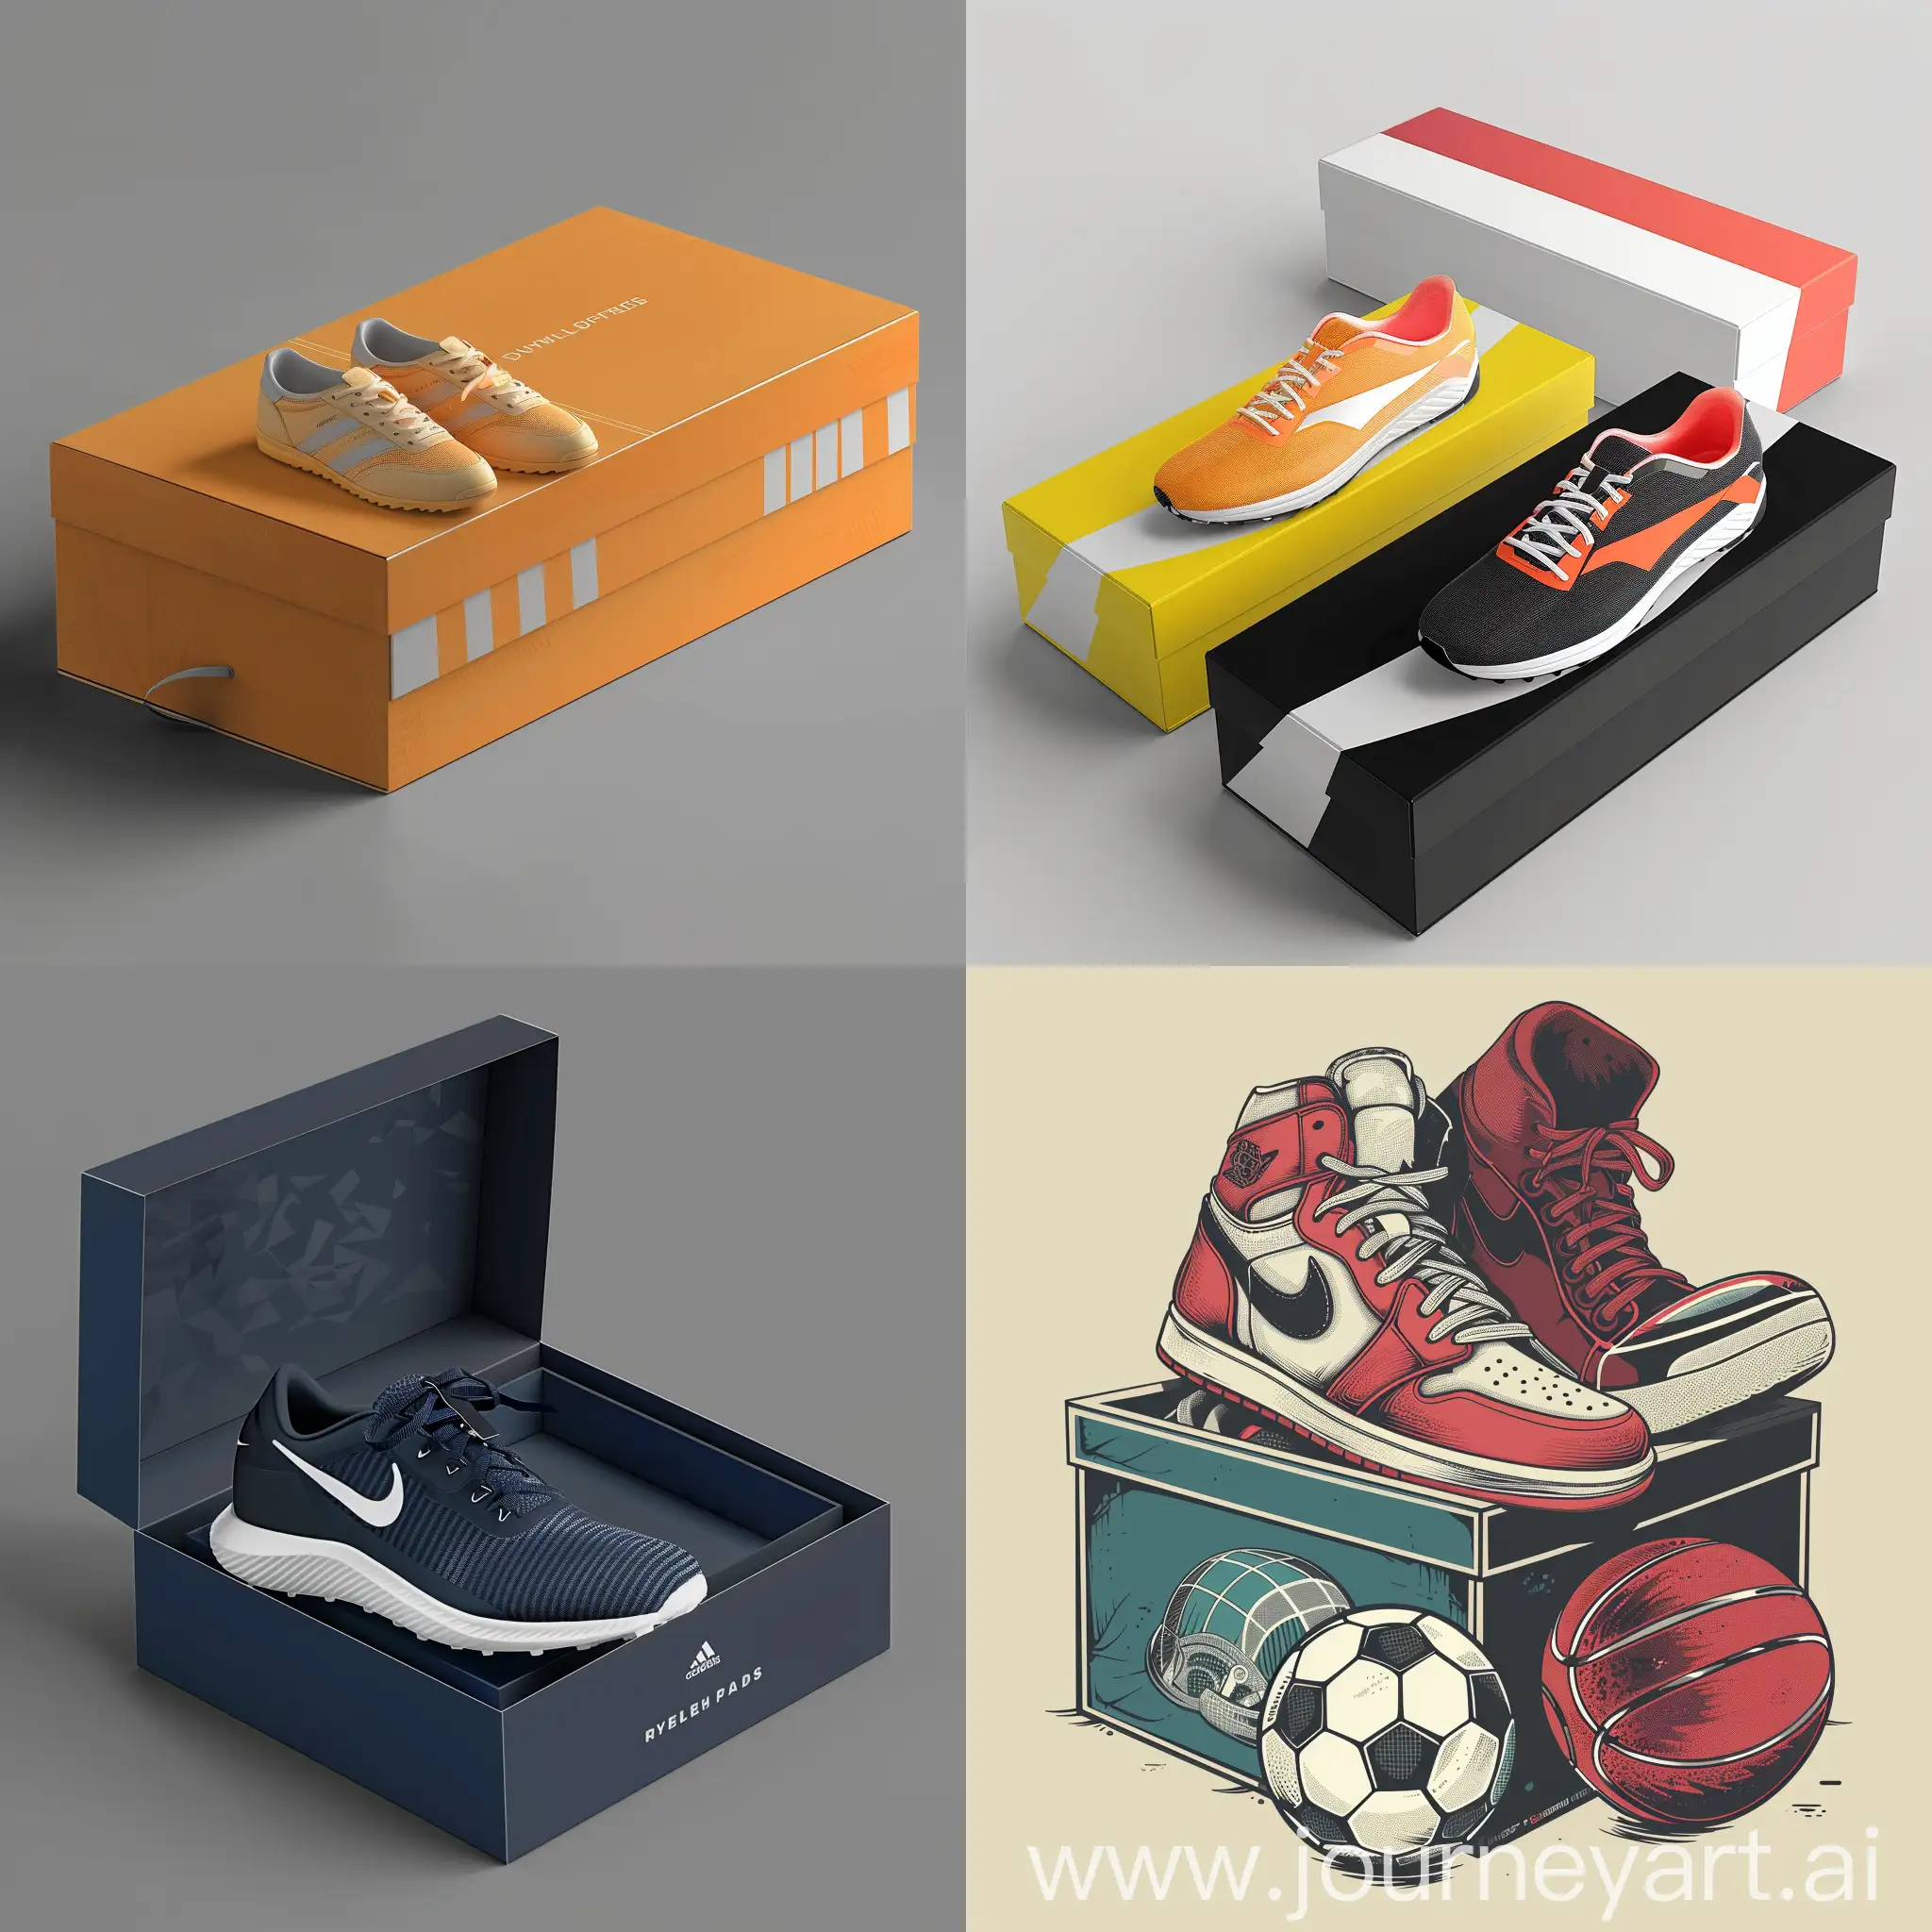 design for sports wears box design